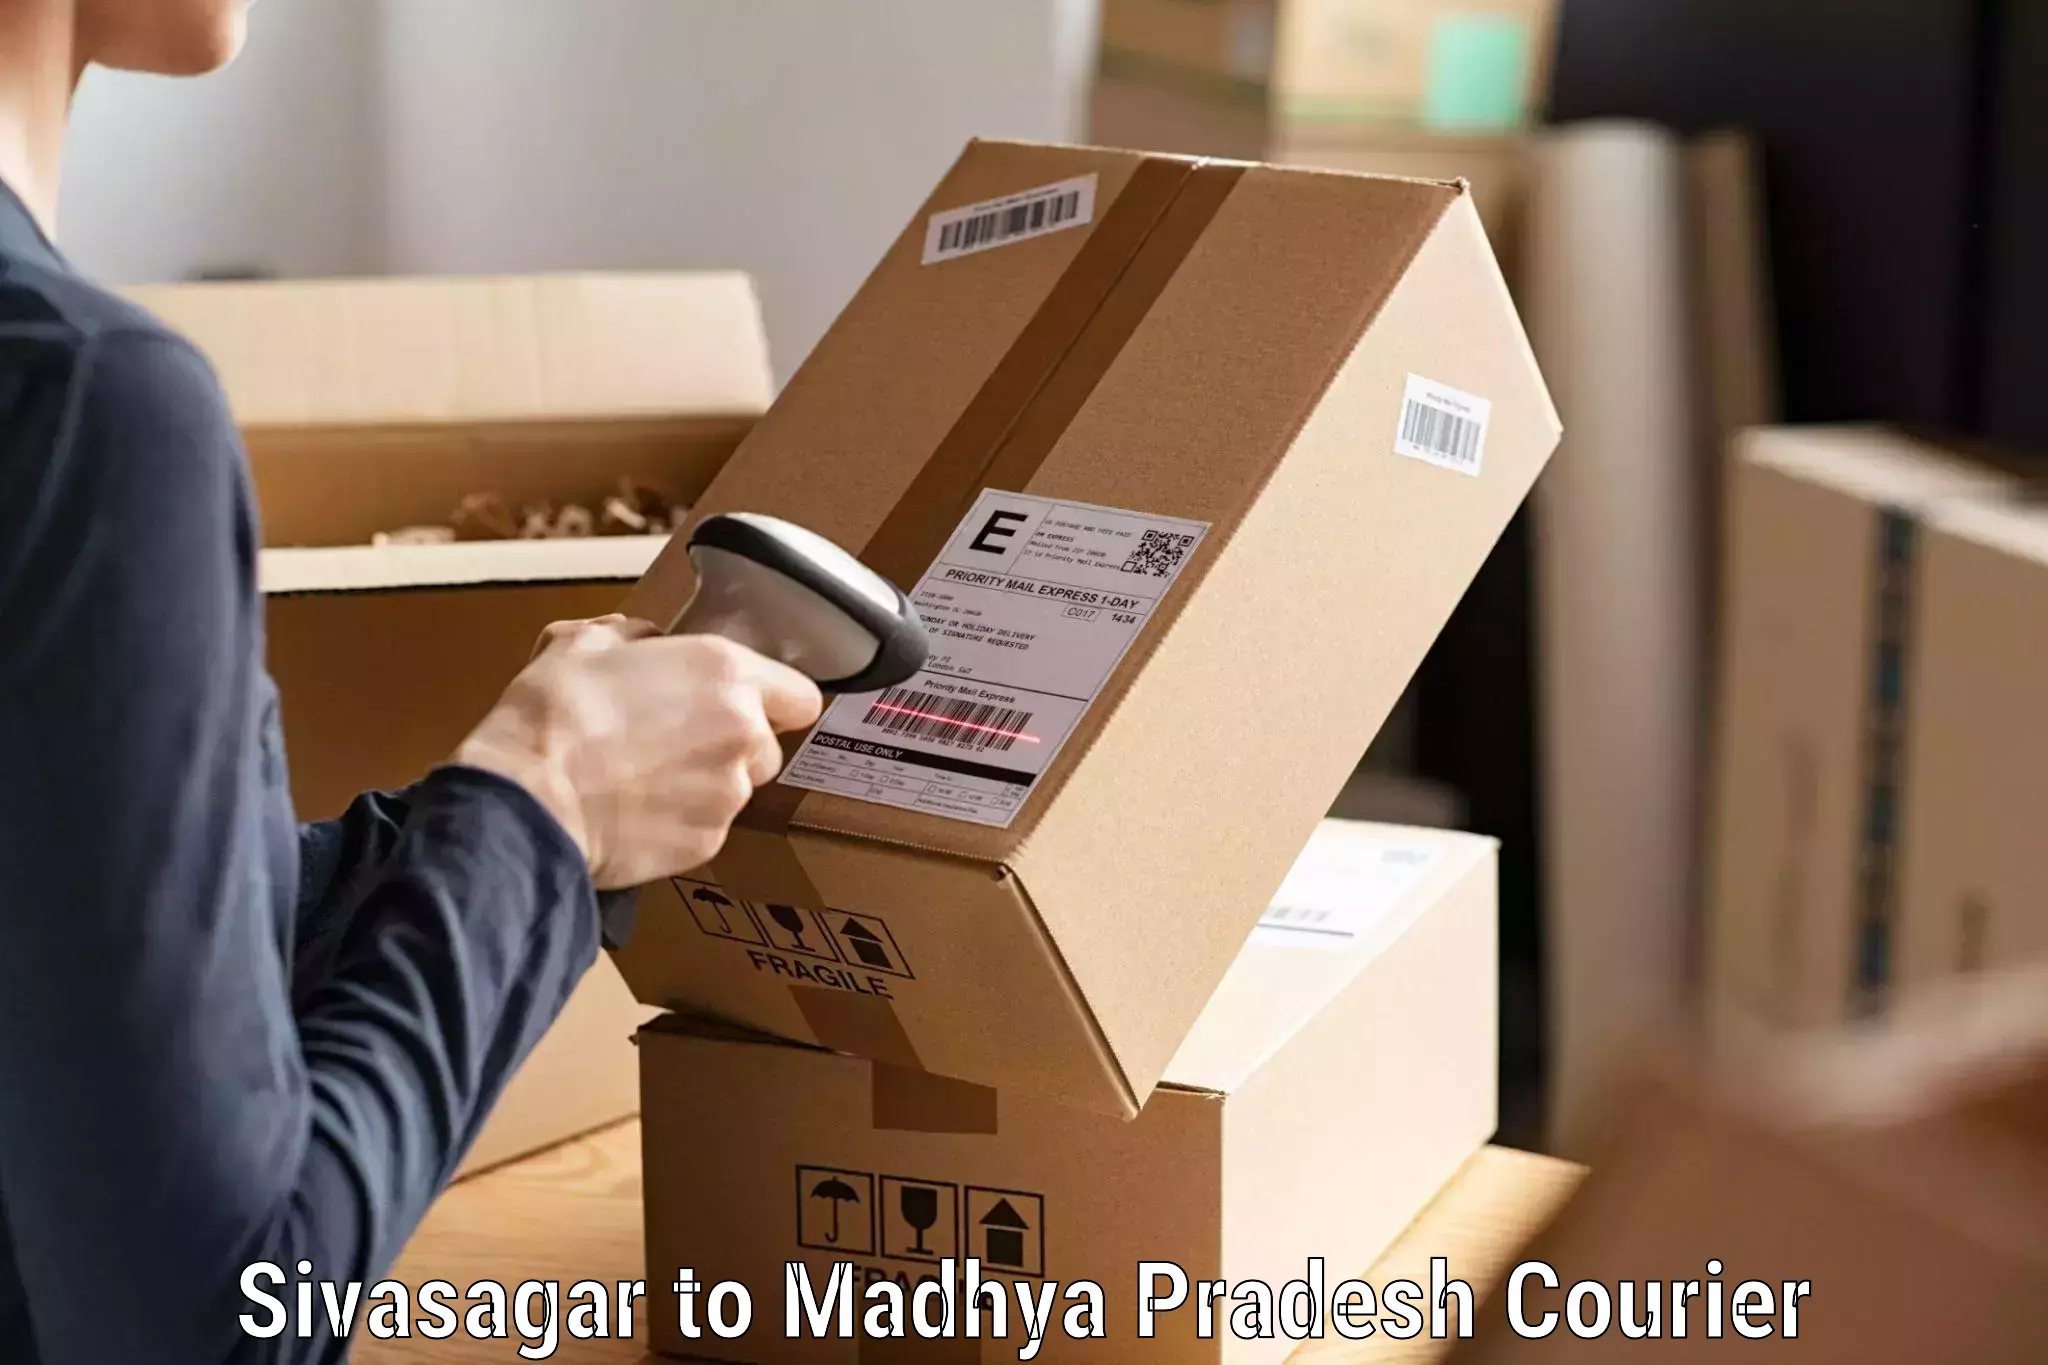 Courier service efficiency Sivasagar to Rajendragram